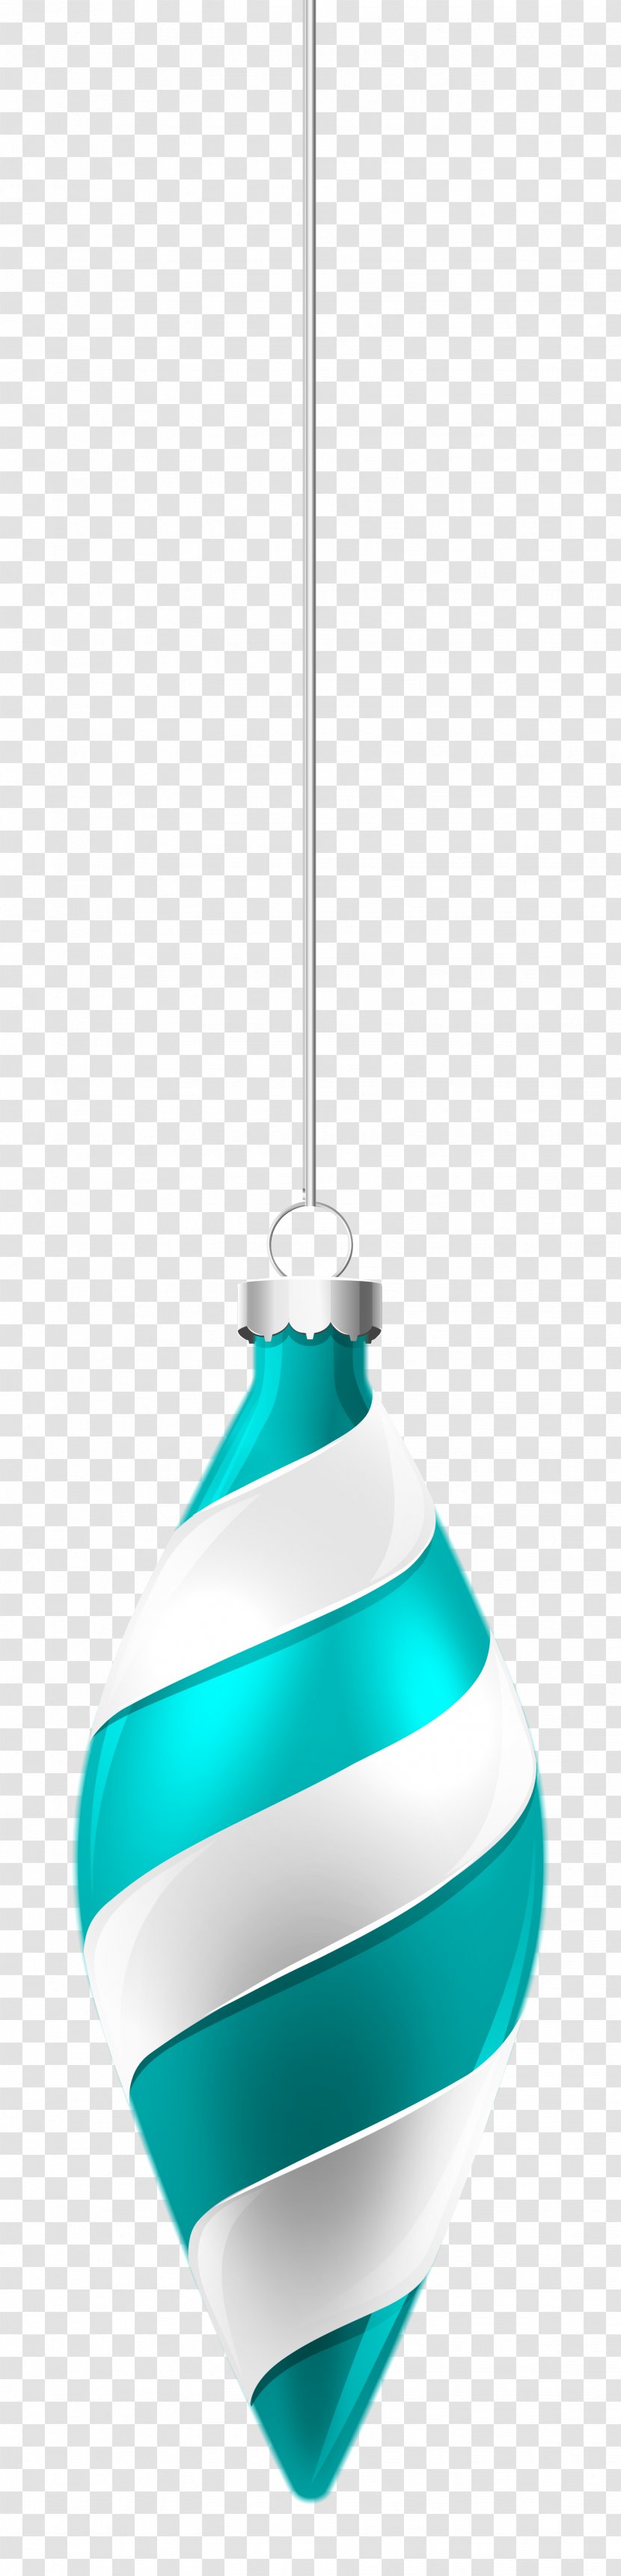 Christmas Ornament Decoration Clip Art - Lighting - Teal Transparent PNG